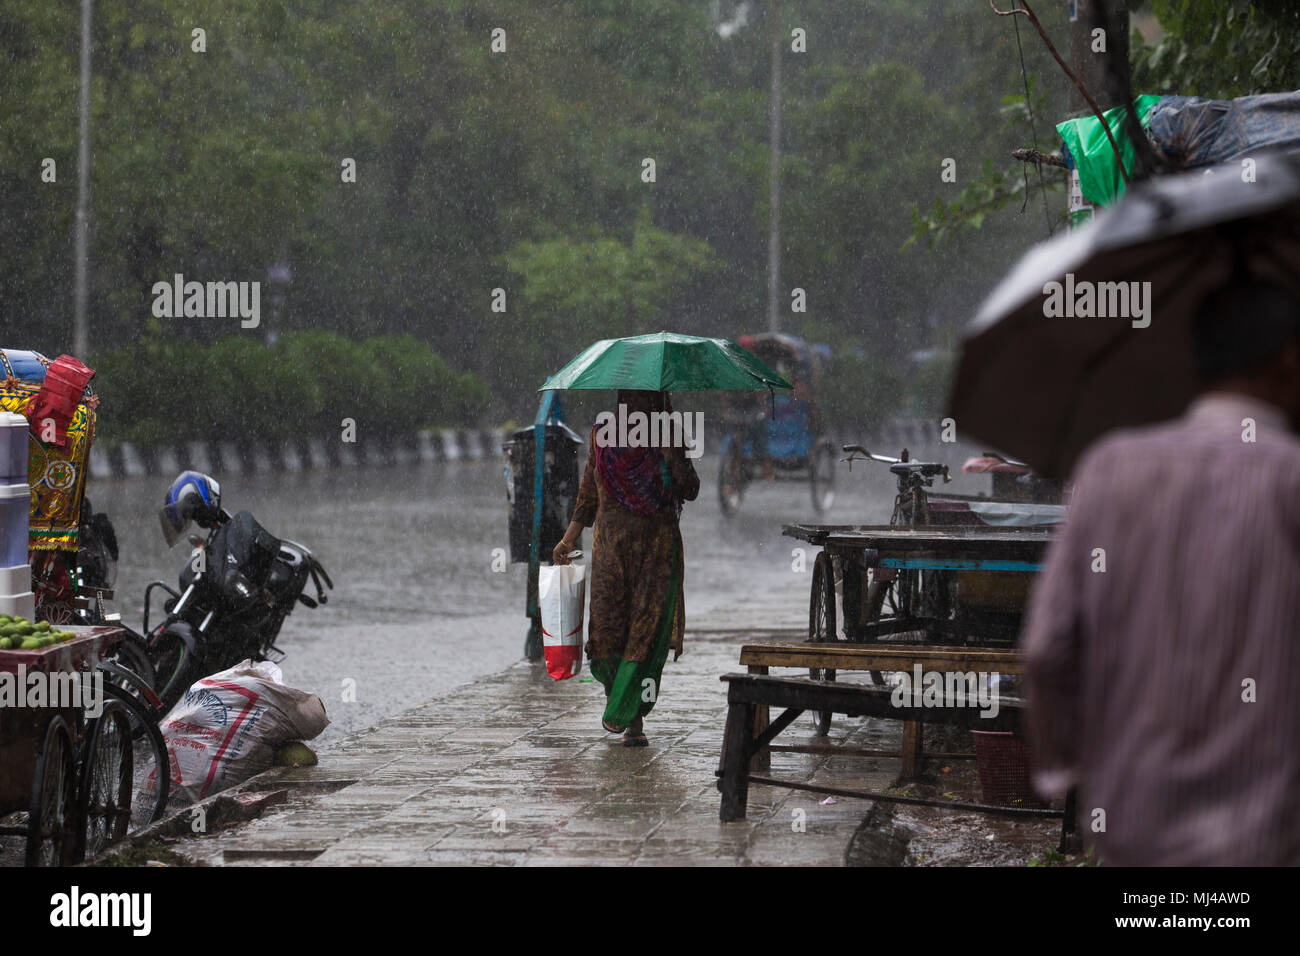 DHAKA, BANGLADESH - MAY 04 : People on street during sudden rain in Dhaka, Bangladesh on May 04, 2018. Credit: zakir hossain chowdhury zakir/Alamy Live News Stock Photo